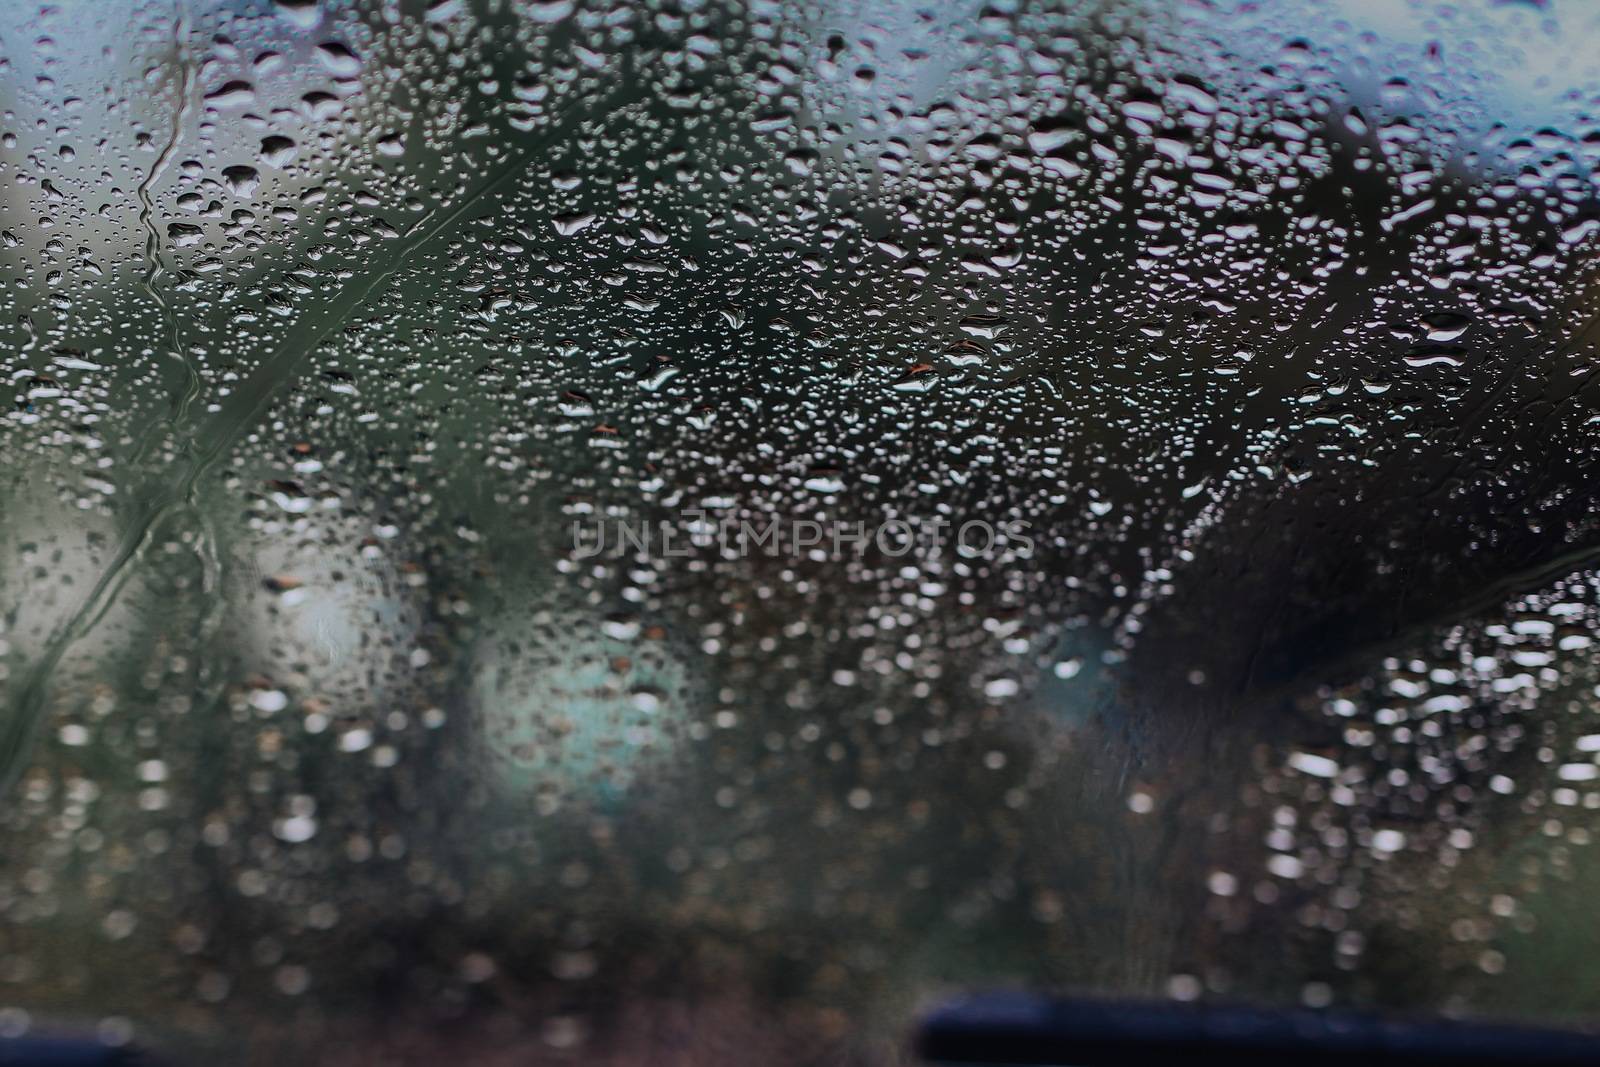 Raindrops on the windshield, blurry scenes